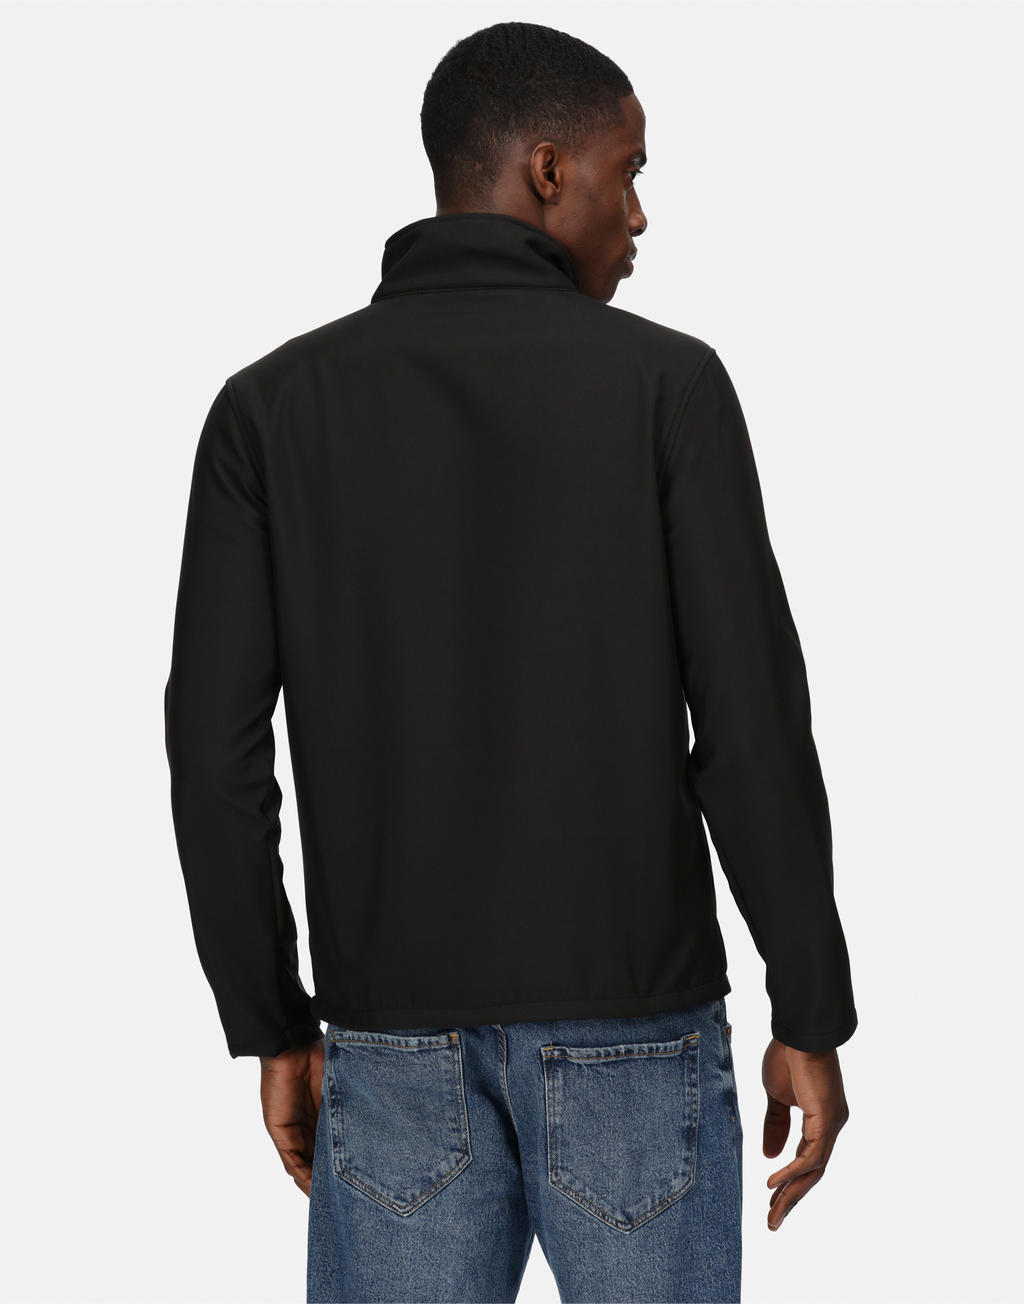  Eco Ablaze Softshell Jacket in Farbe Black/Black